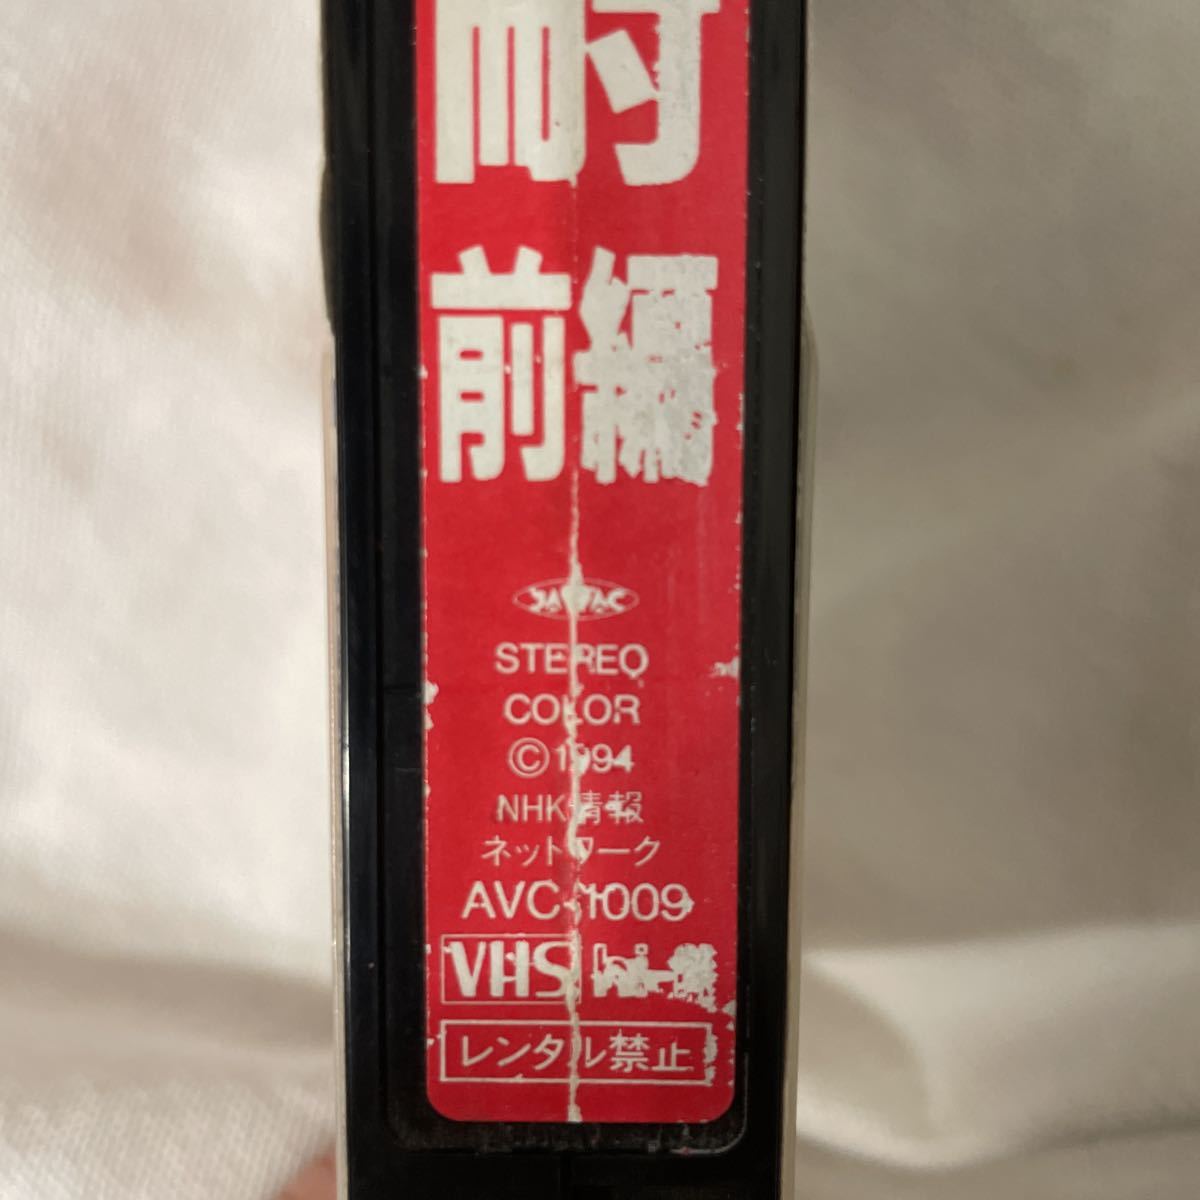 VHS[\'94 Suzuka 8 hours front compilation ] Toshiba EMI( stock ) Suzuka circuit load race bike 